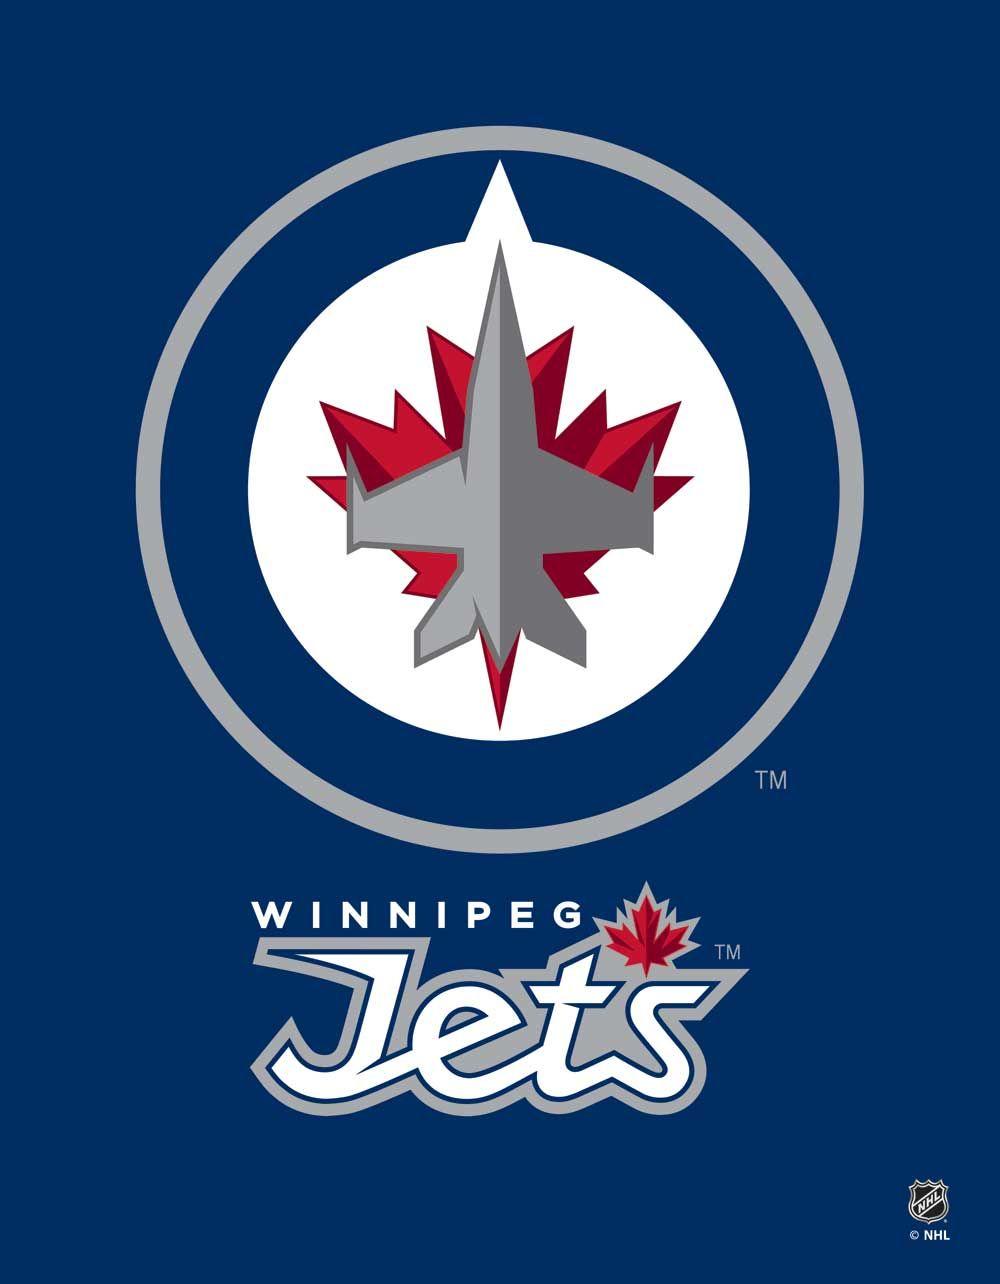 Winnipeg Jets Team Logo - Winnipeg Jets logo. NHL. Jets hockey, Jet and Winnipeg